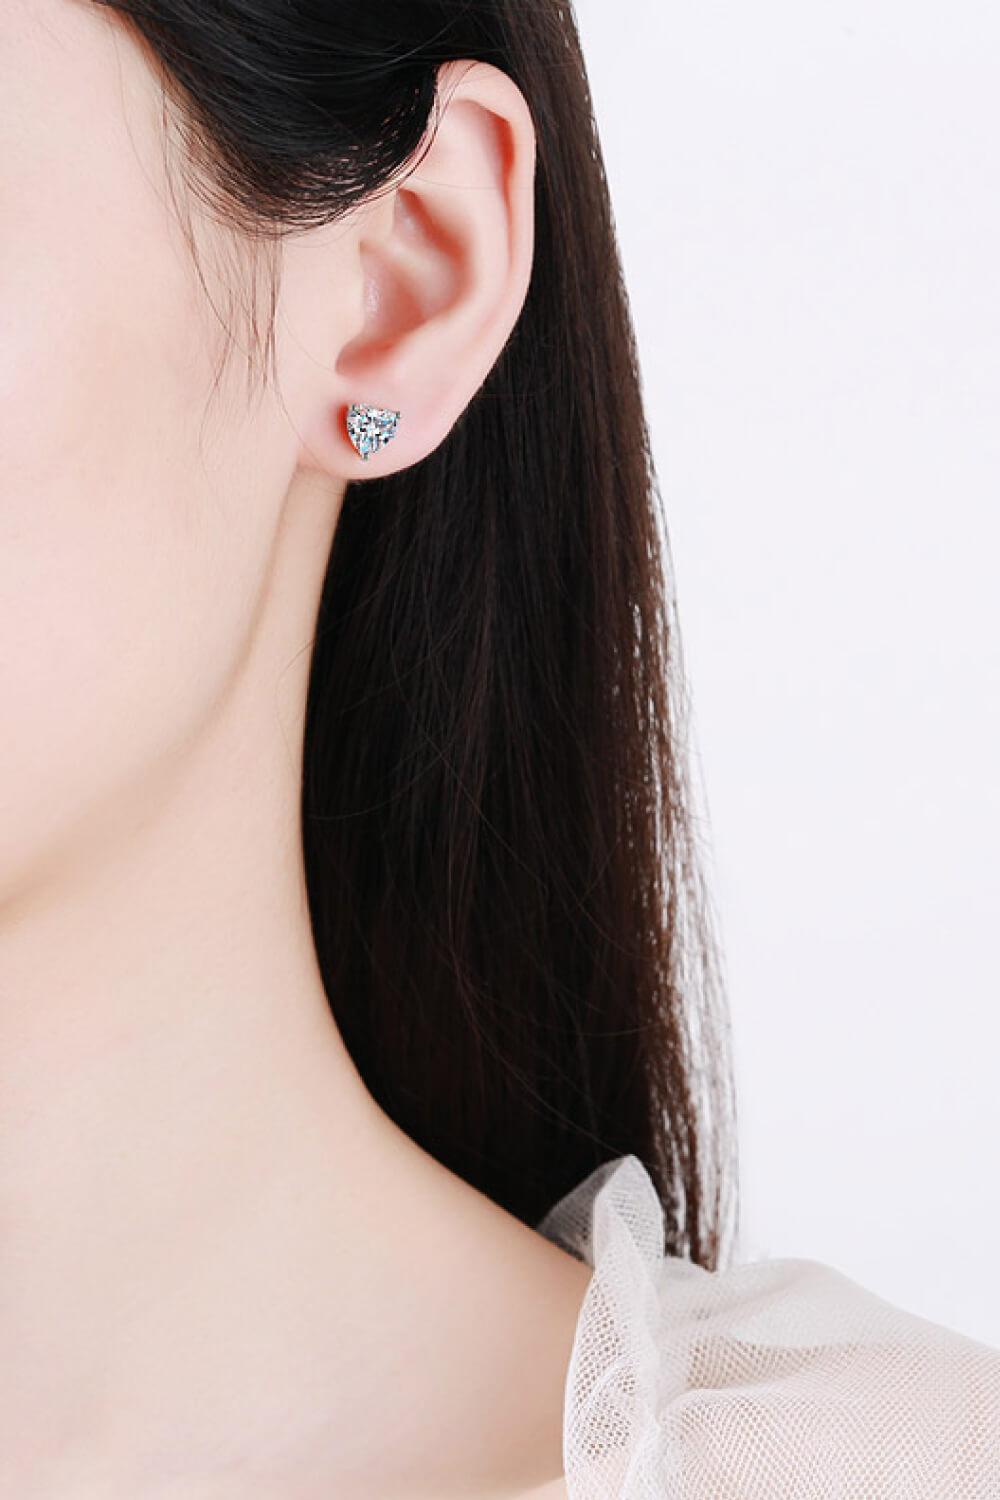 2 Carat Moissanite Heart-Shaped Stud Earrings BLUE ZONE PLANET